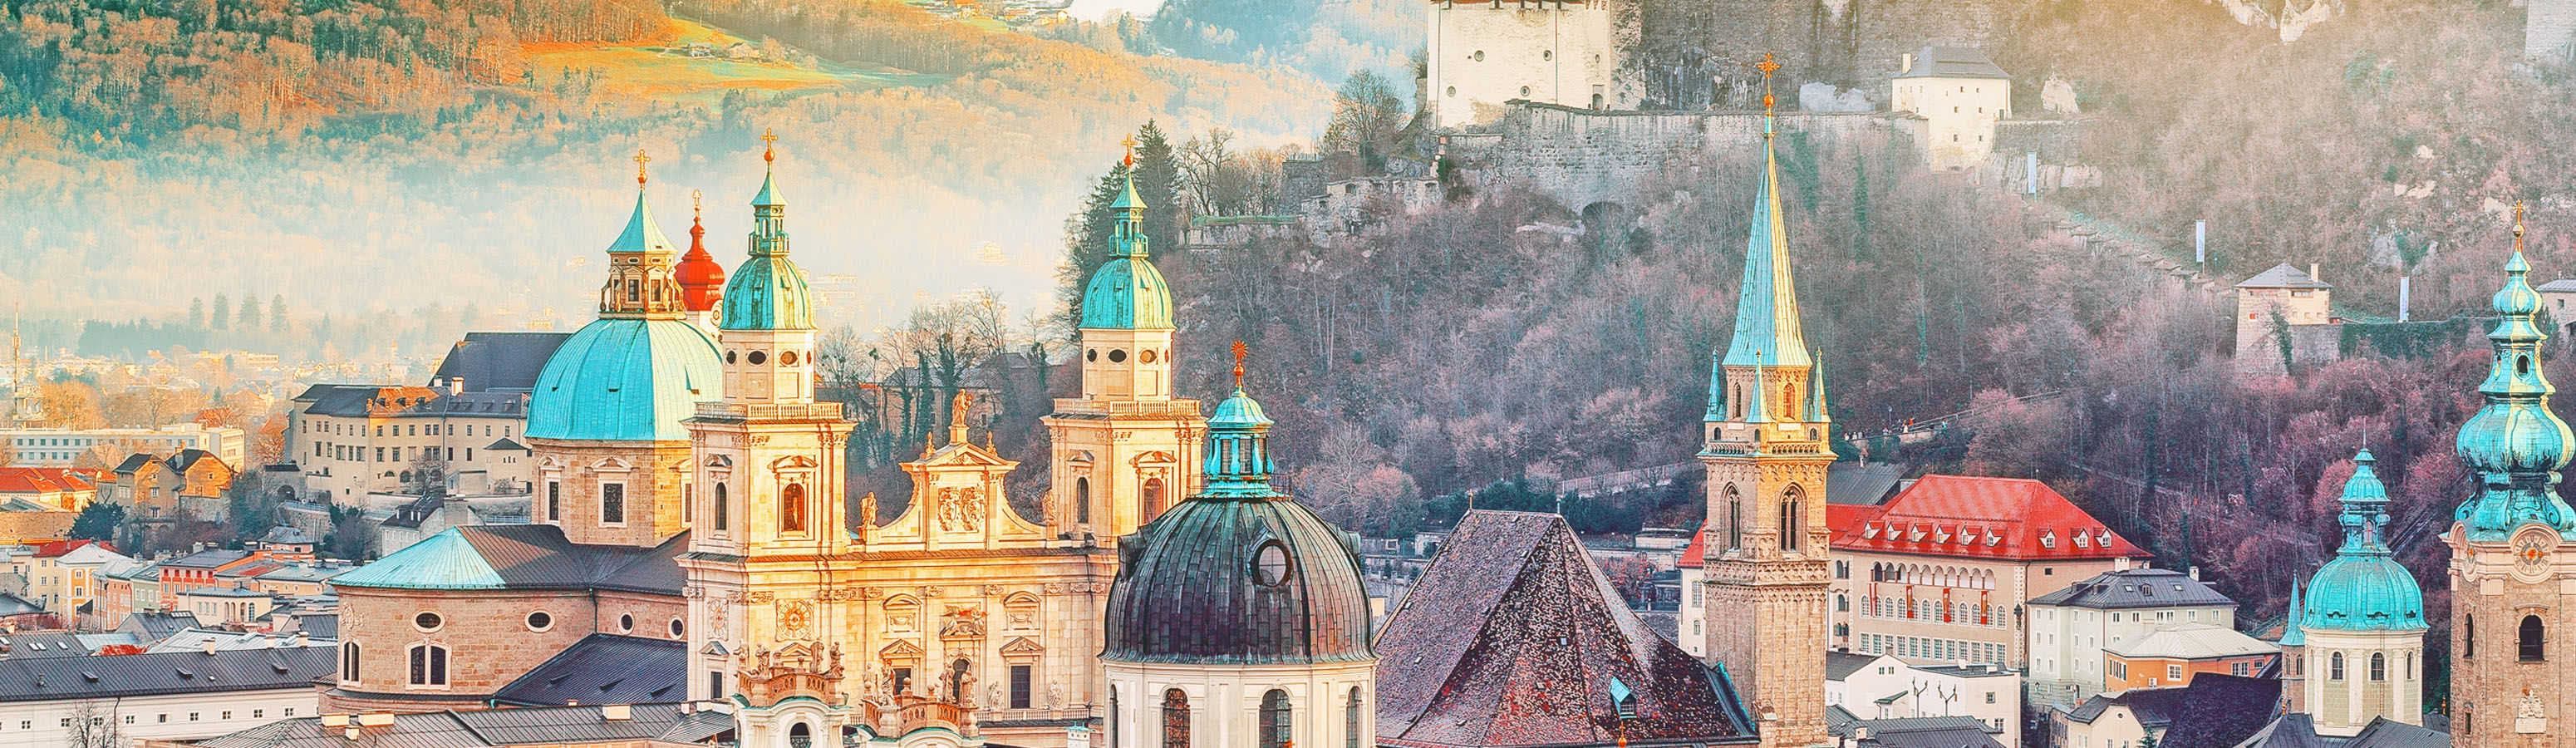 L'Austria attira bontà e monumenti